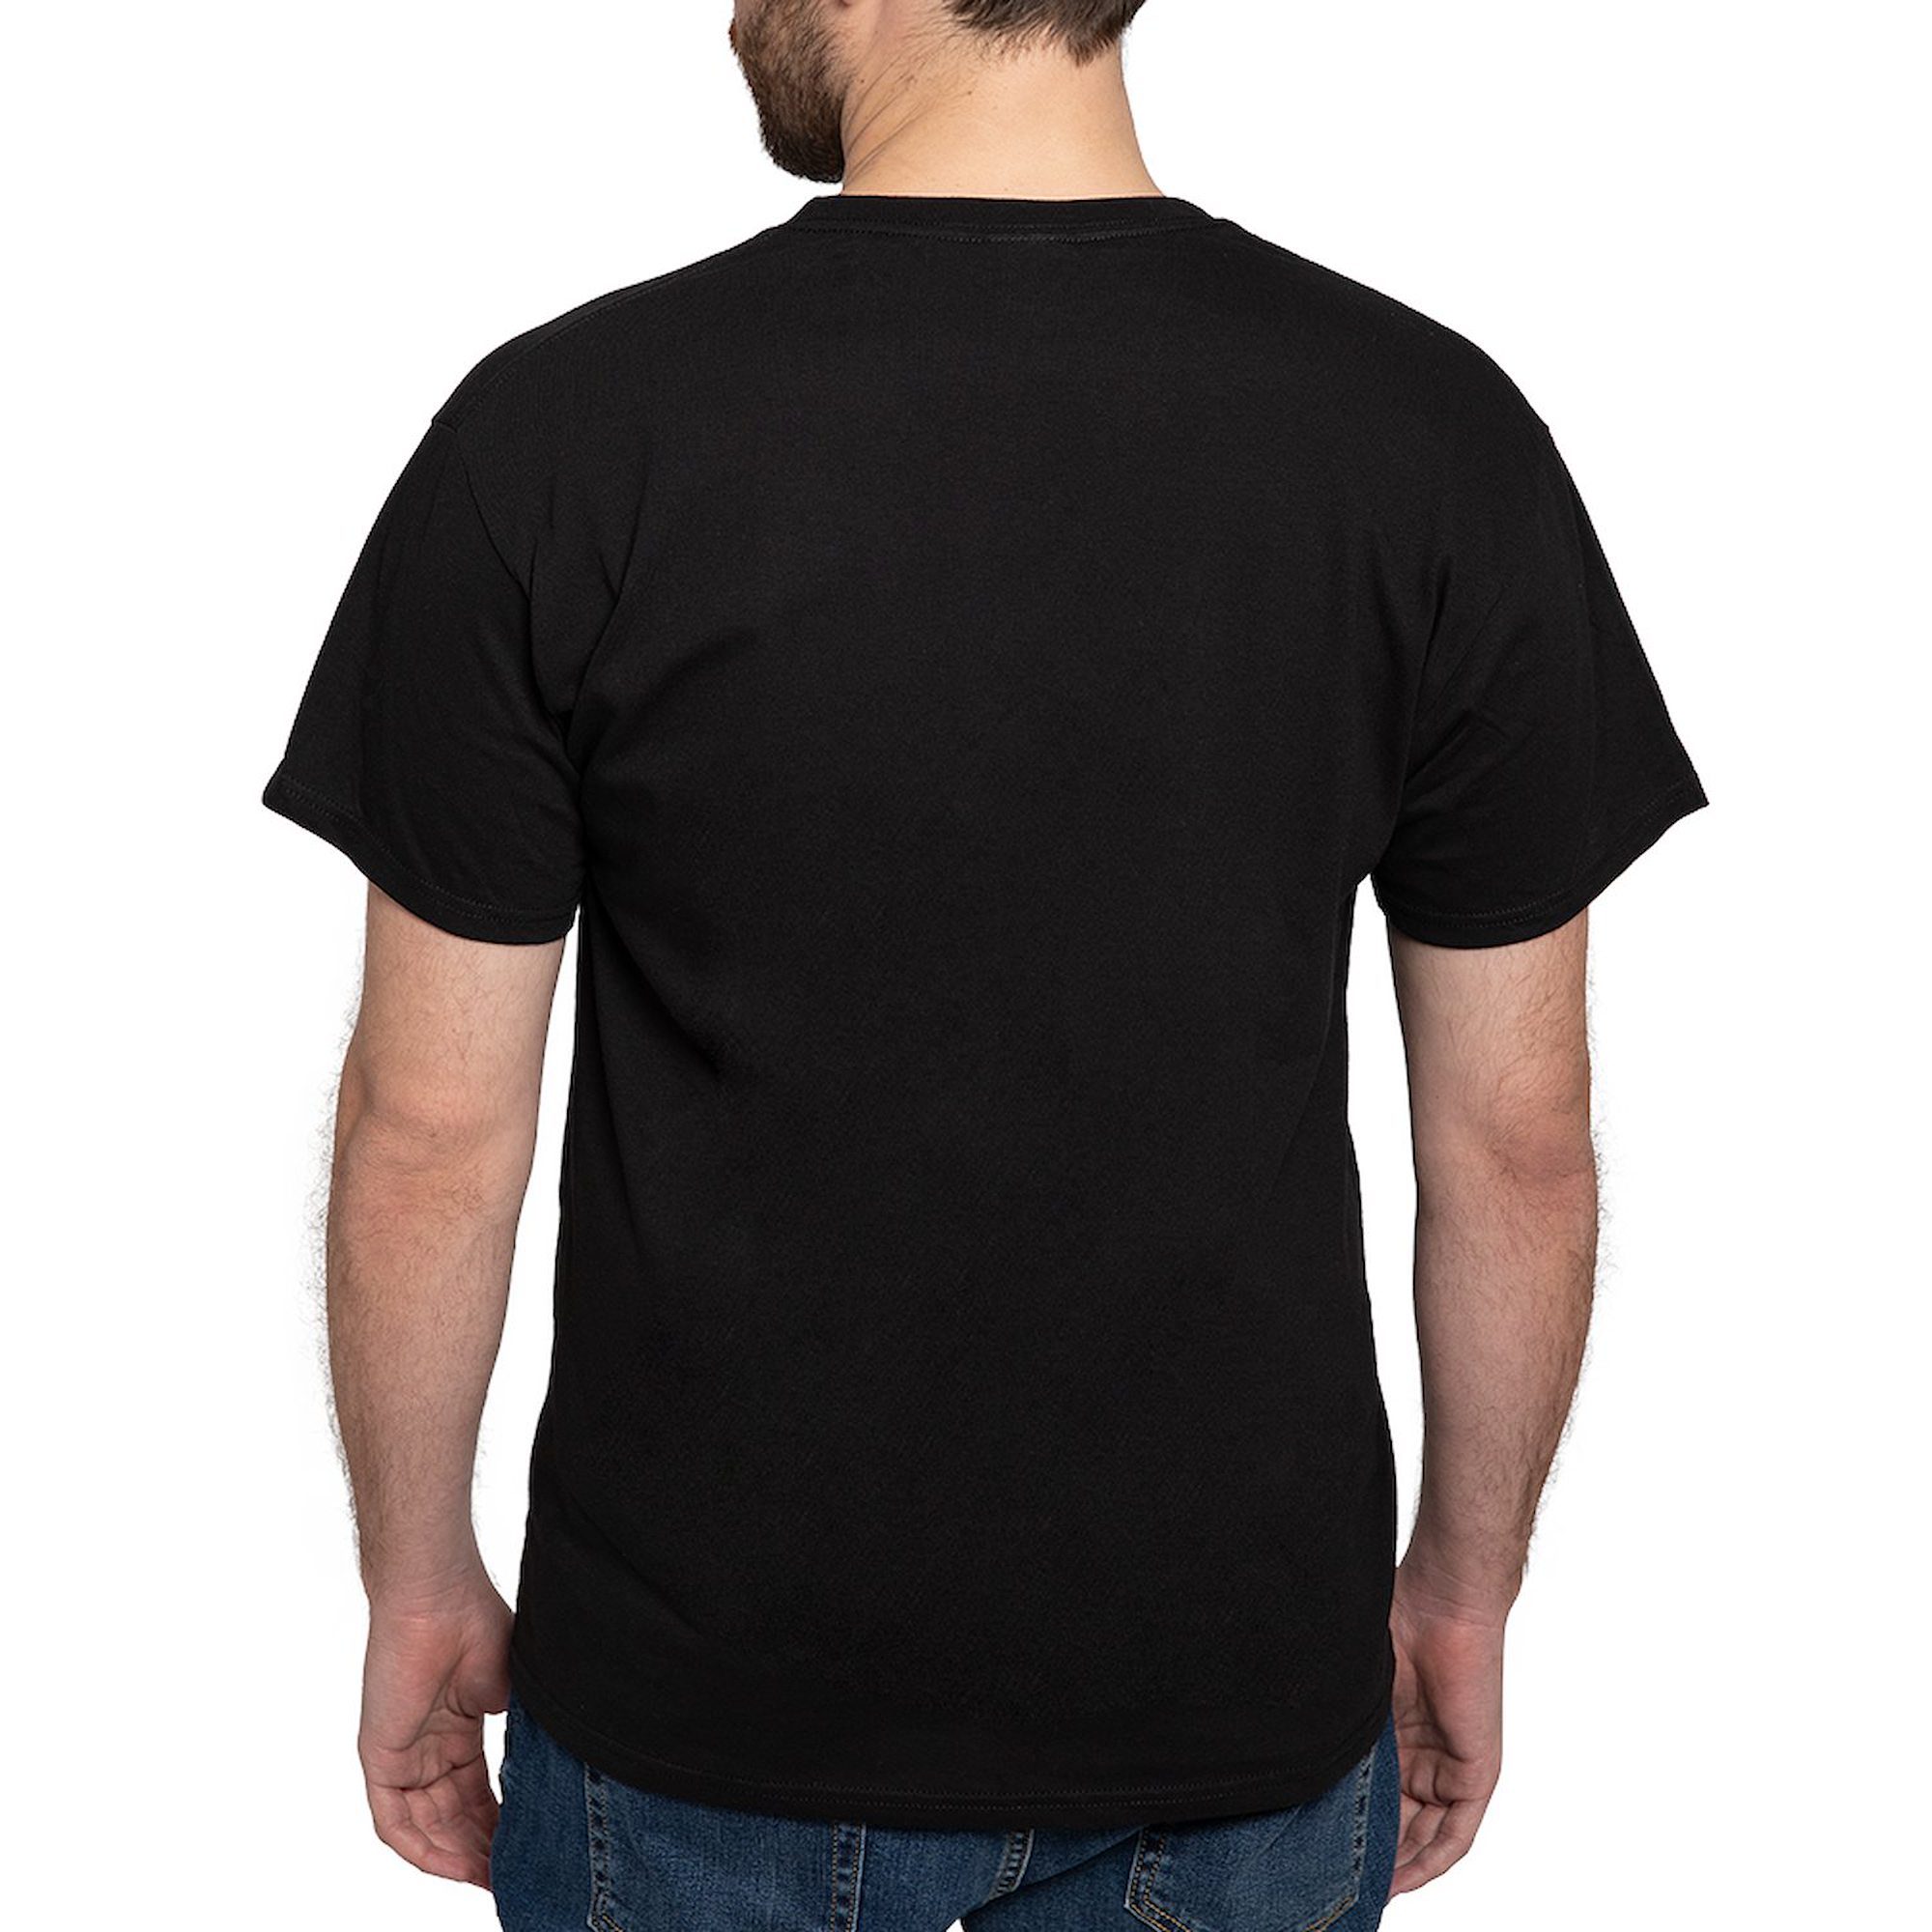 CafePress - Undefeated World War Champs Dark T Shirt - 100% Cotton T-Shirt - image 2 of 4